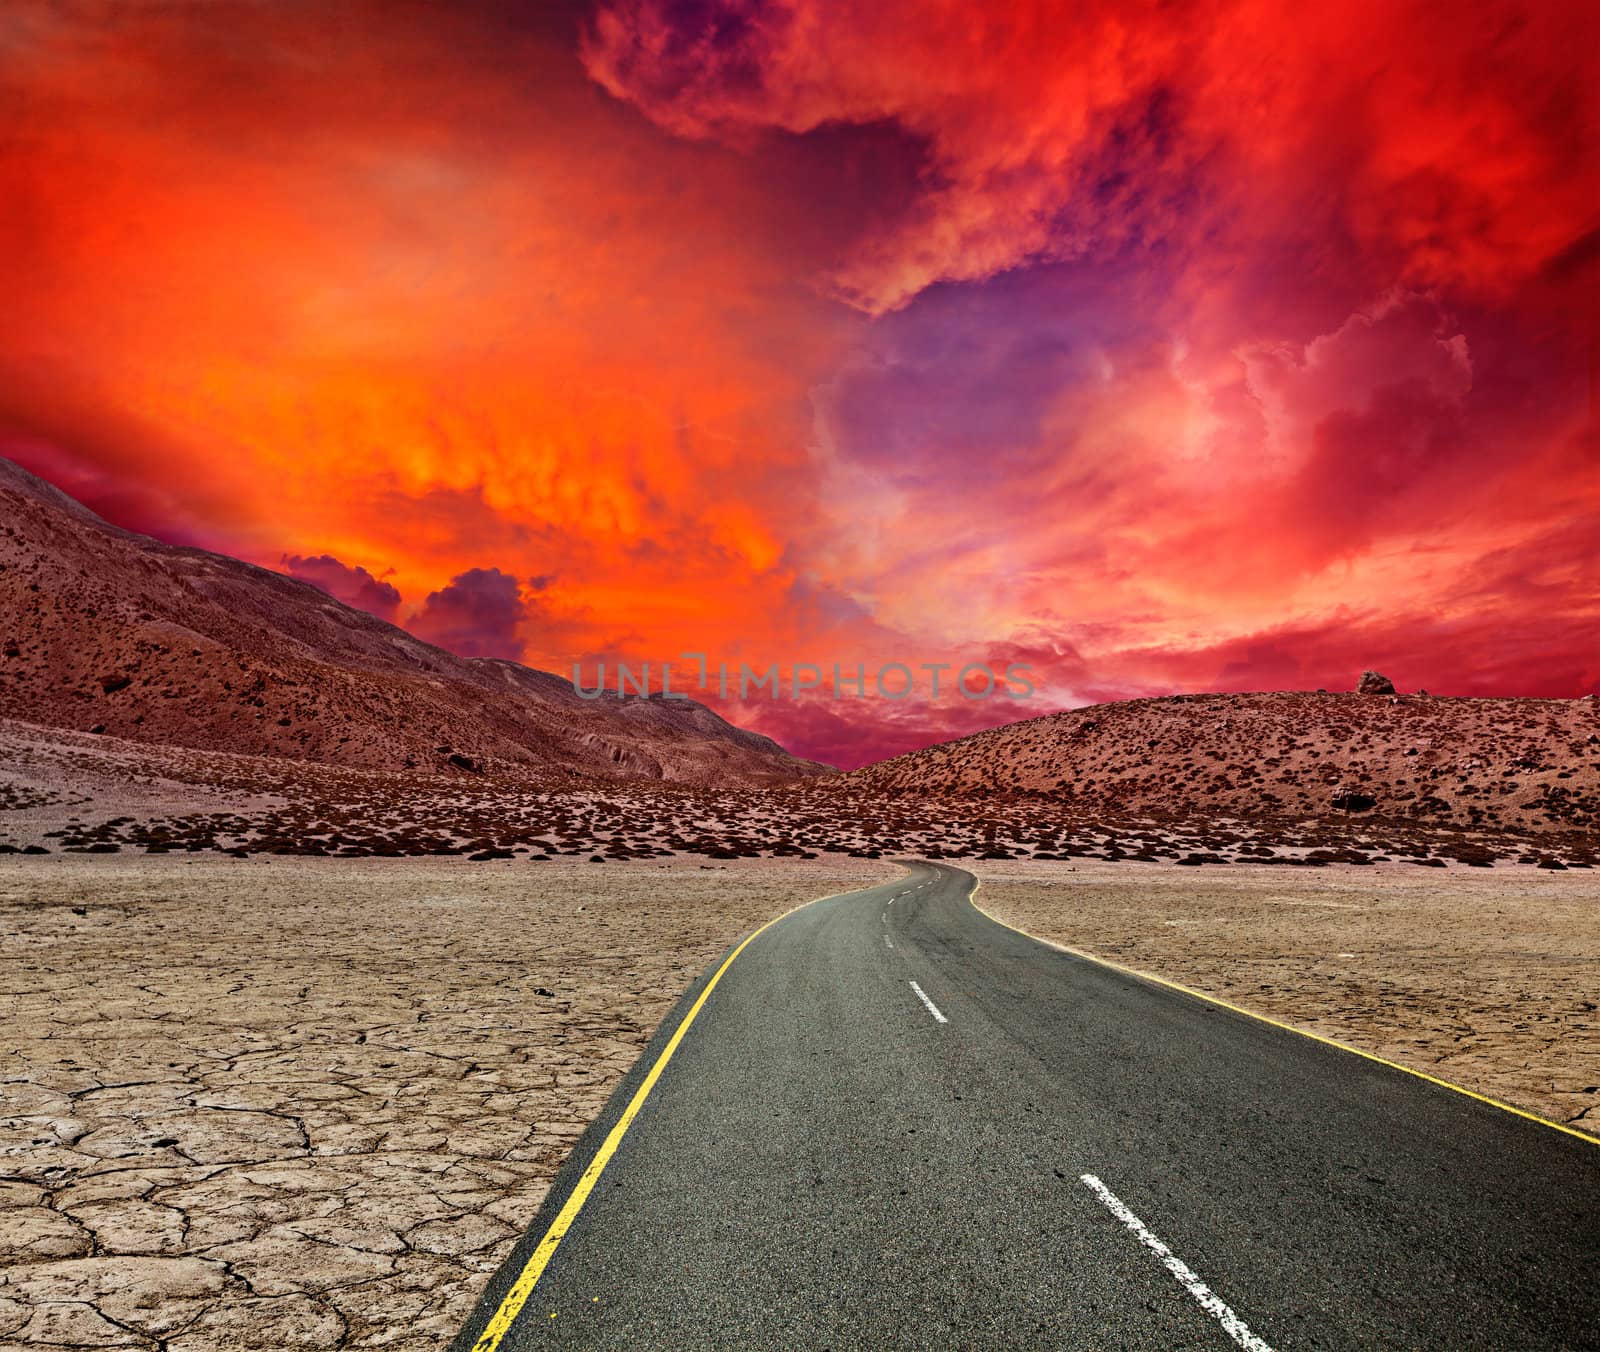 Road in desert by dimol